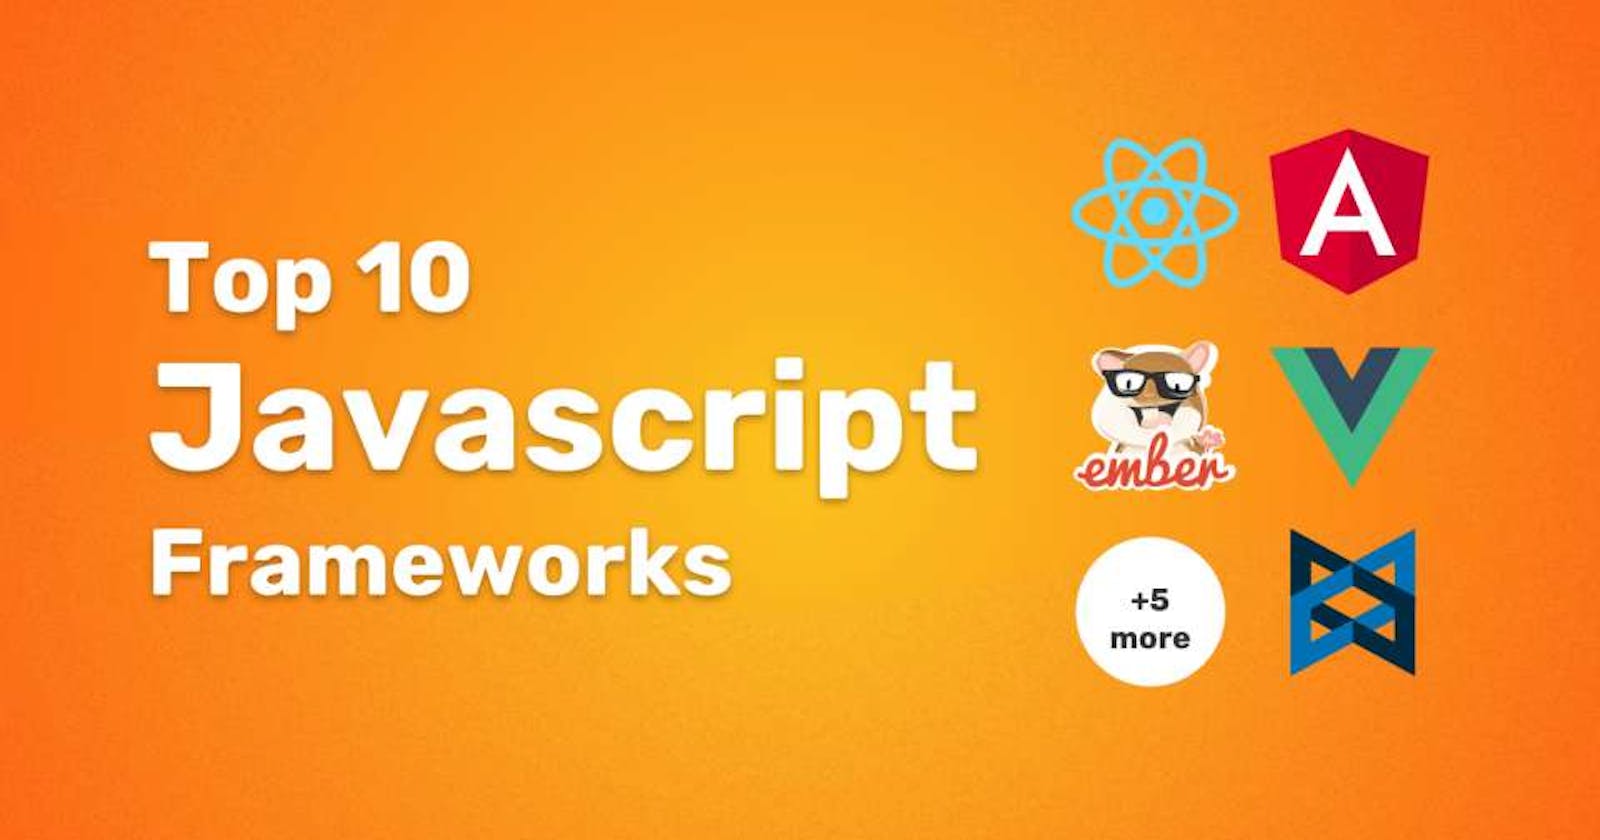 Top 10 JavaScript Frameworks!